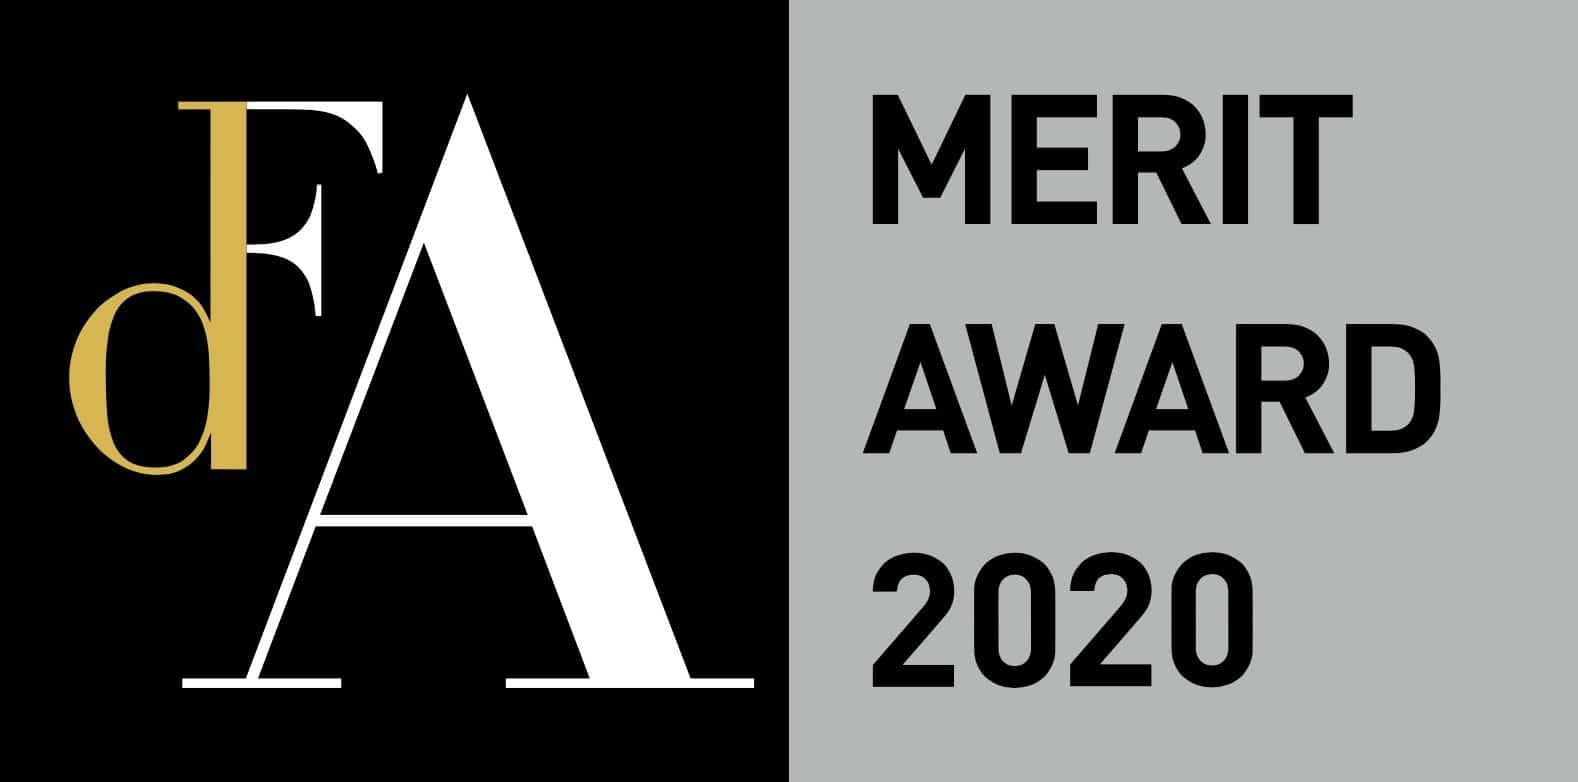 DFA Merit award 2020